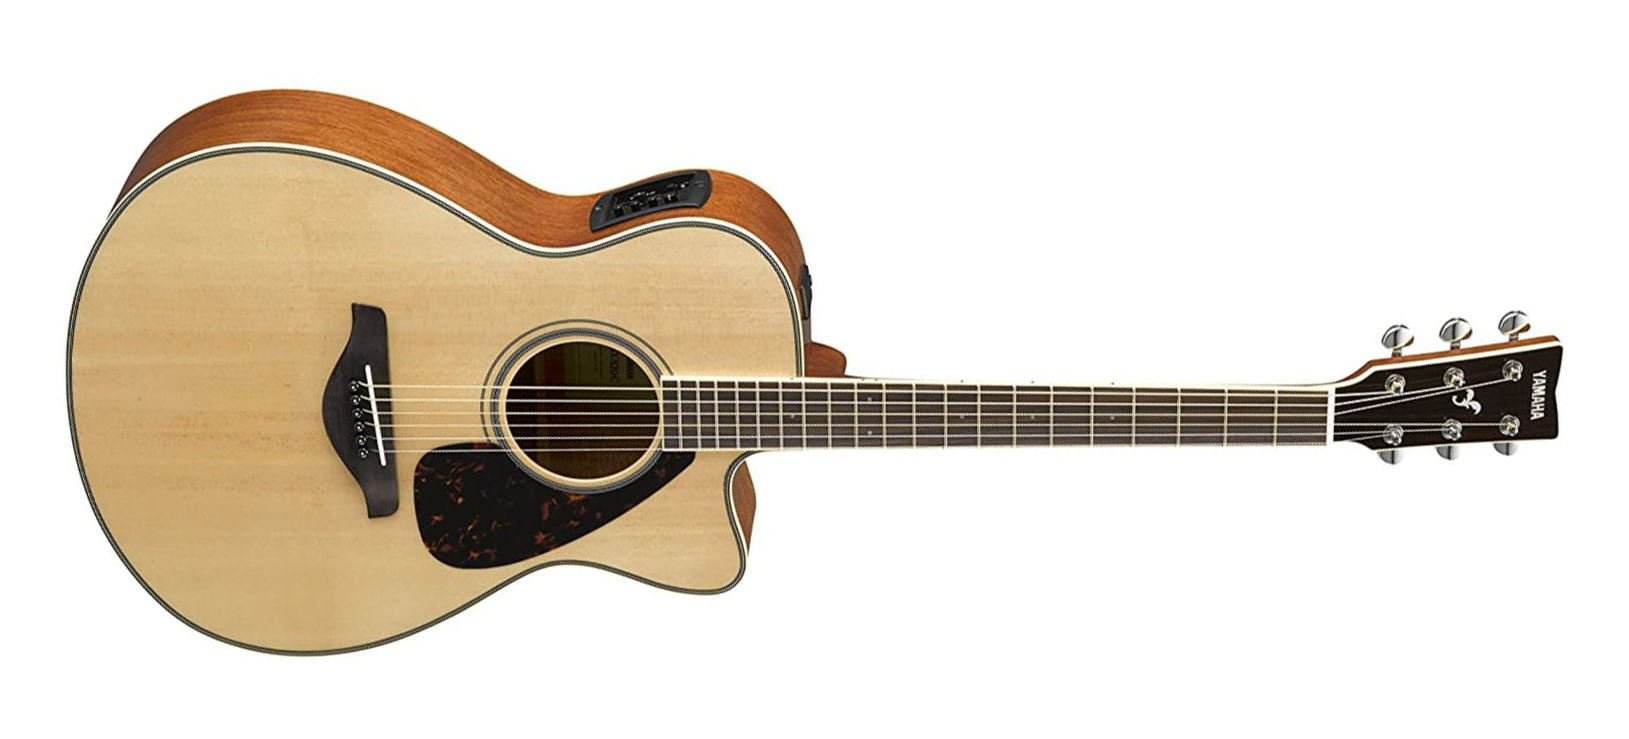 Yamaha FSX820C FSX Series 6-String RH Acoustic Electric Guitar-Natural